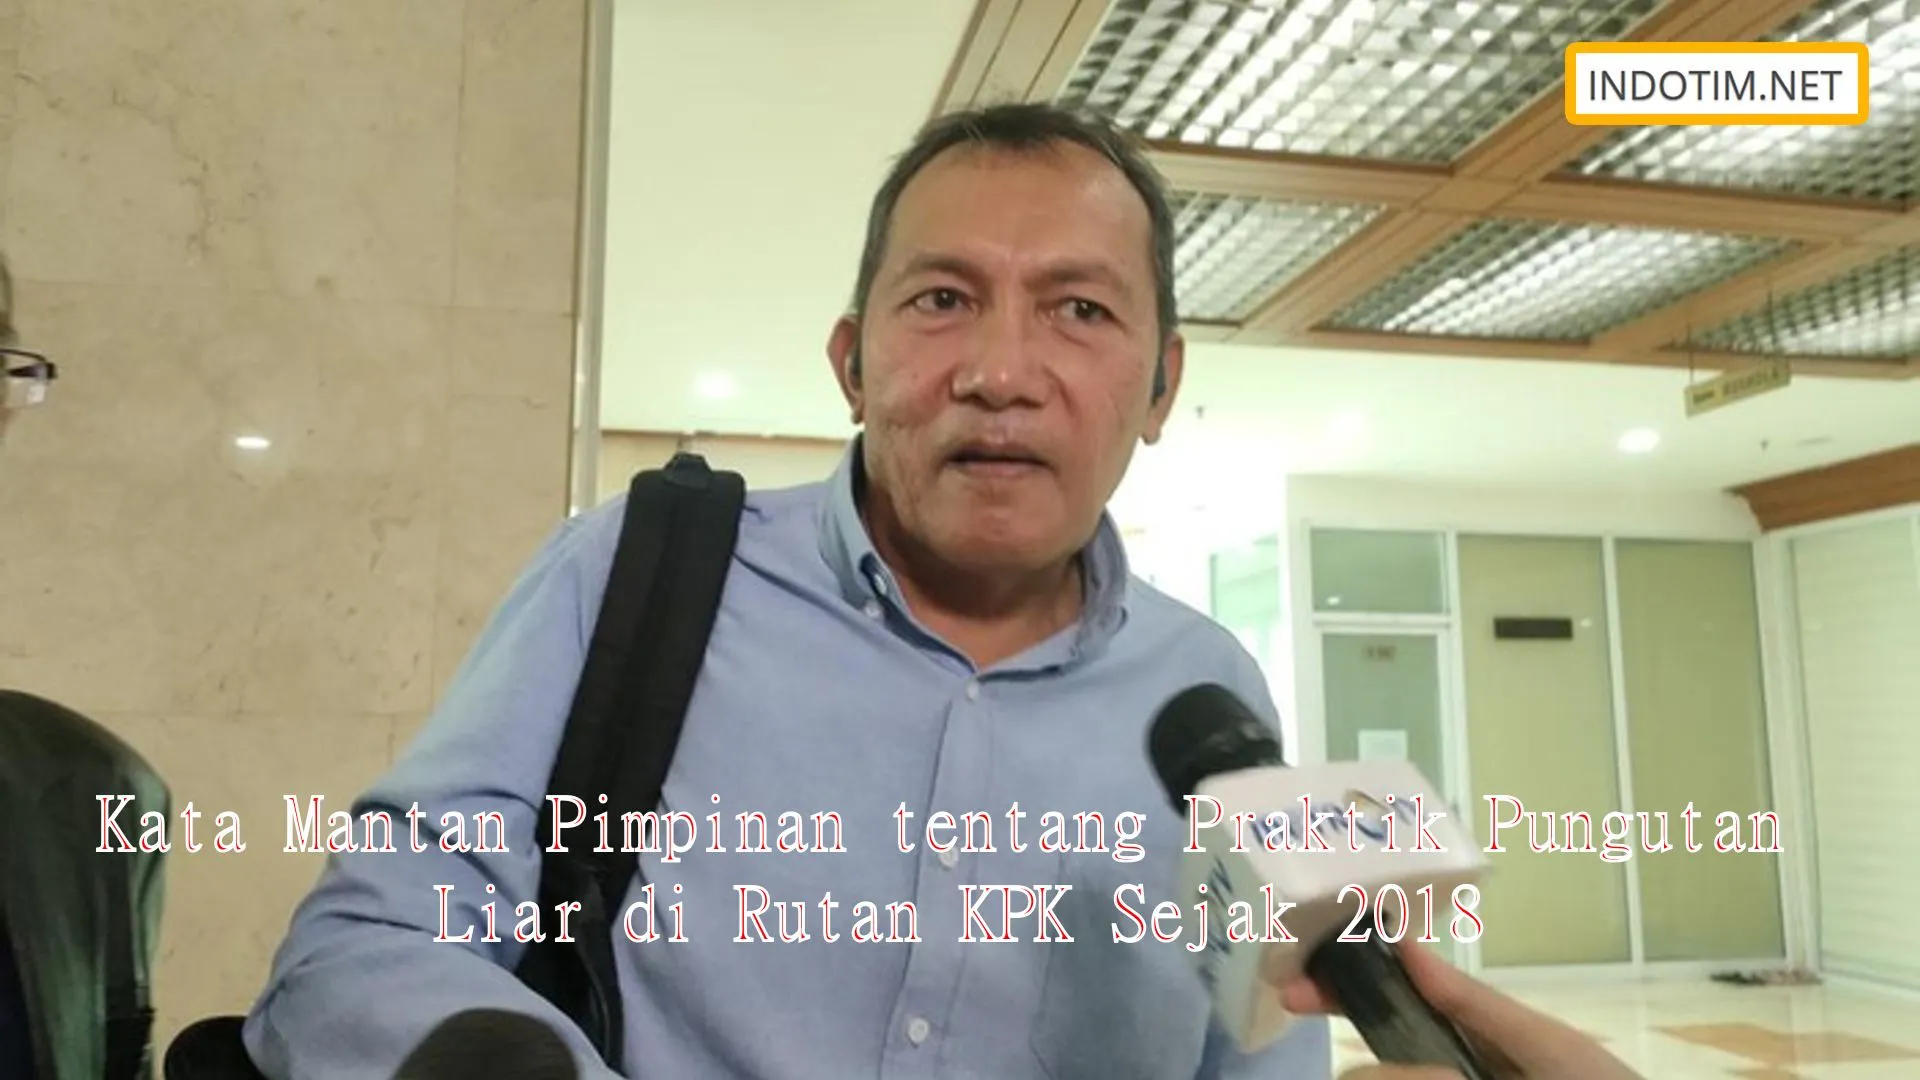 Kata Mantan Pimpinan tentang Praktik Pungutan Liar di Rutan KPK Sejak 2018